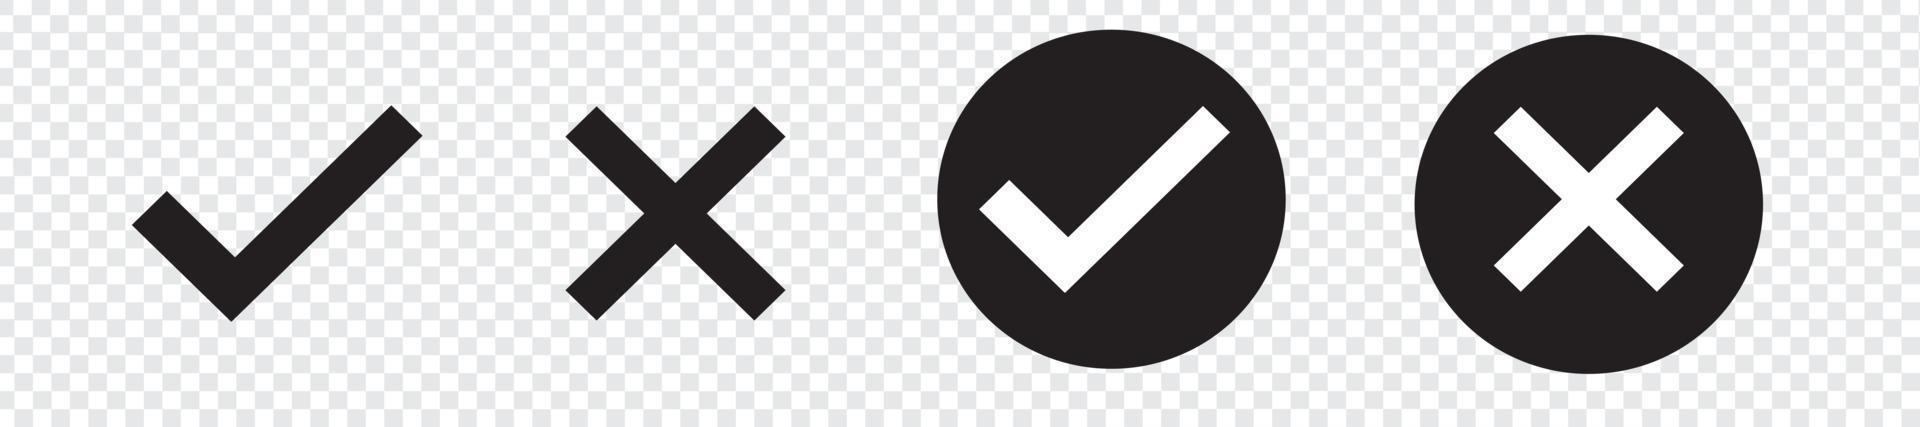 Check mark, Cross mark black icon set. vector